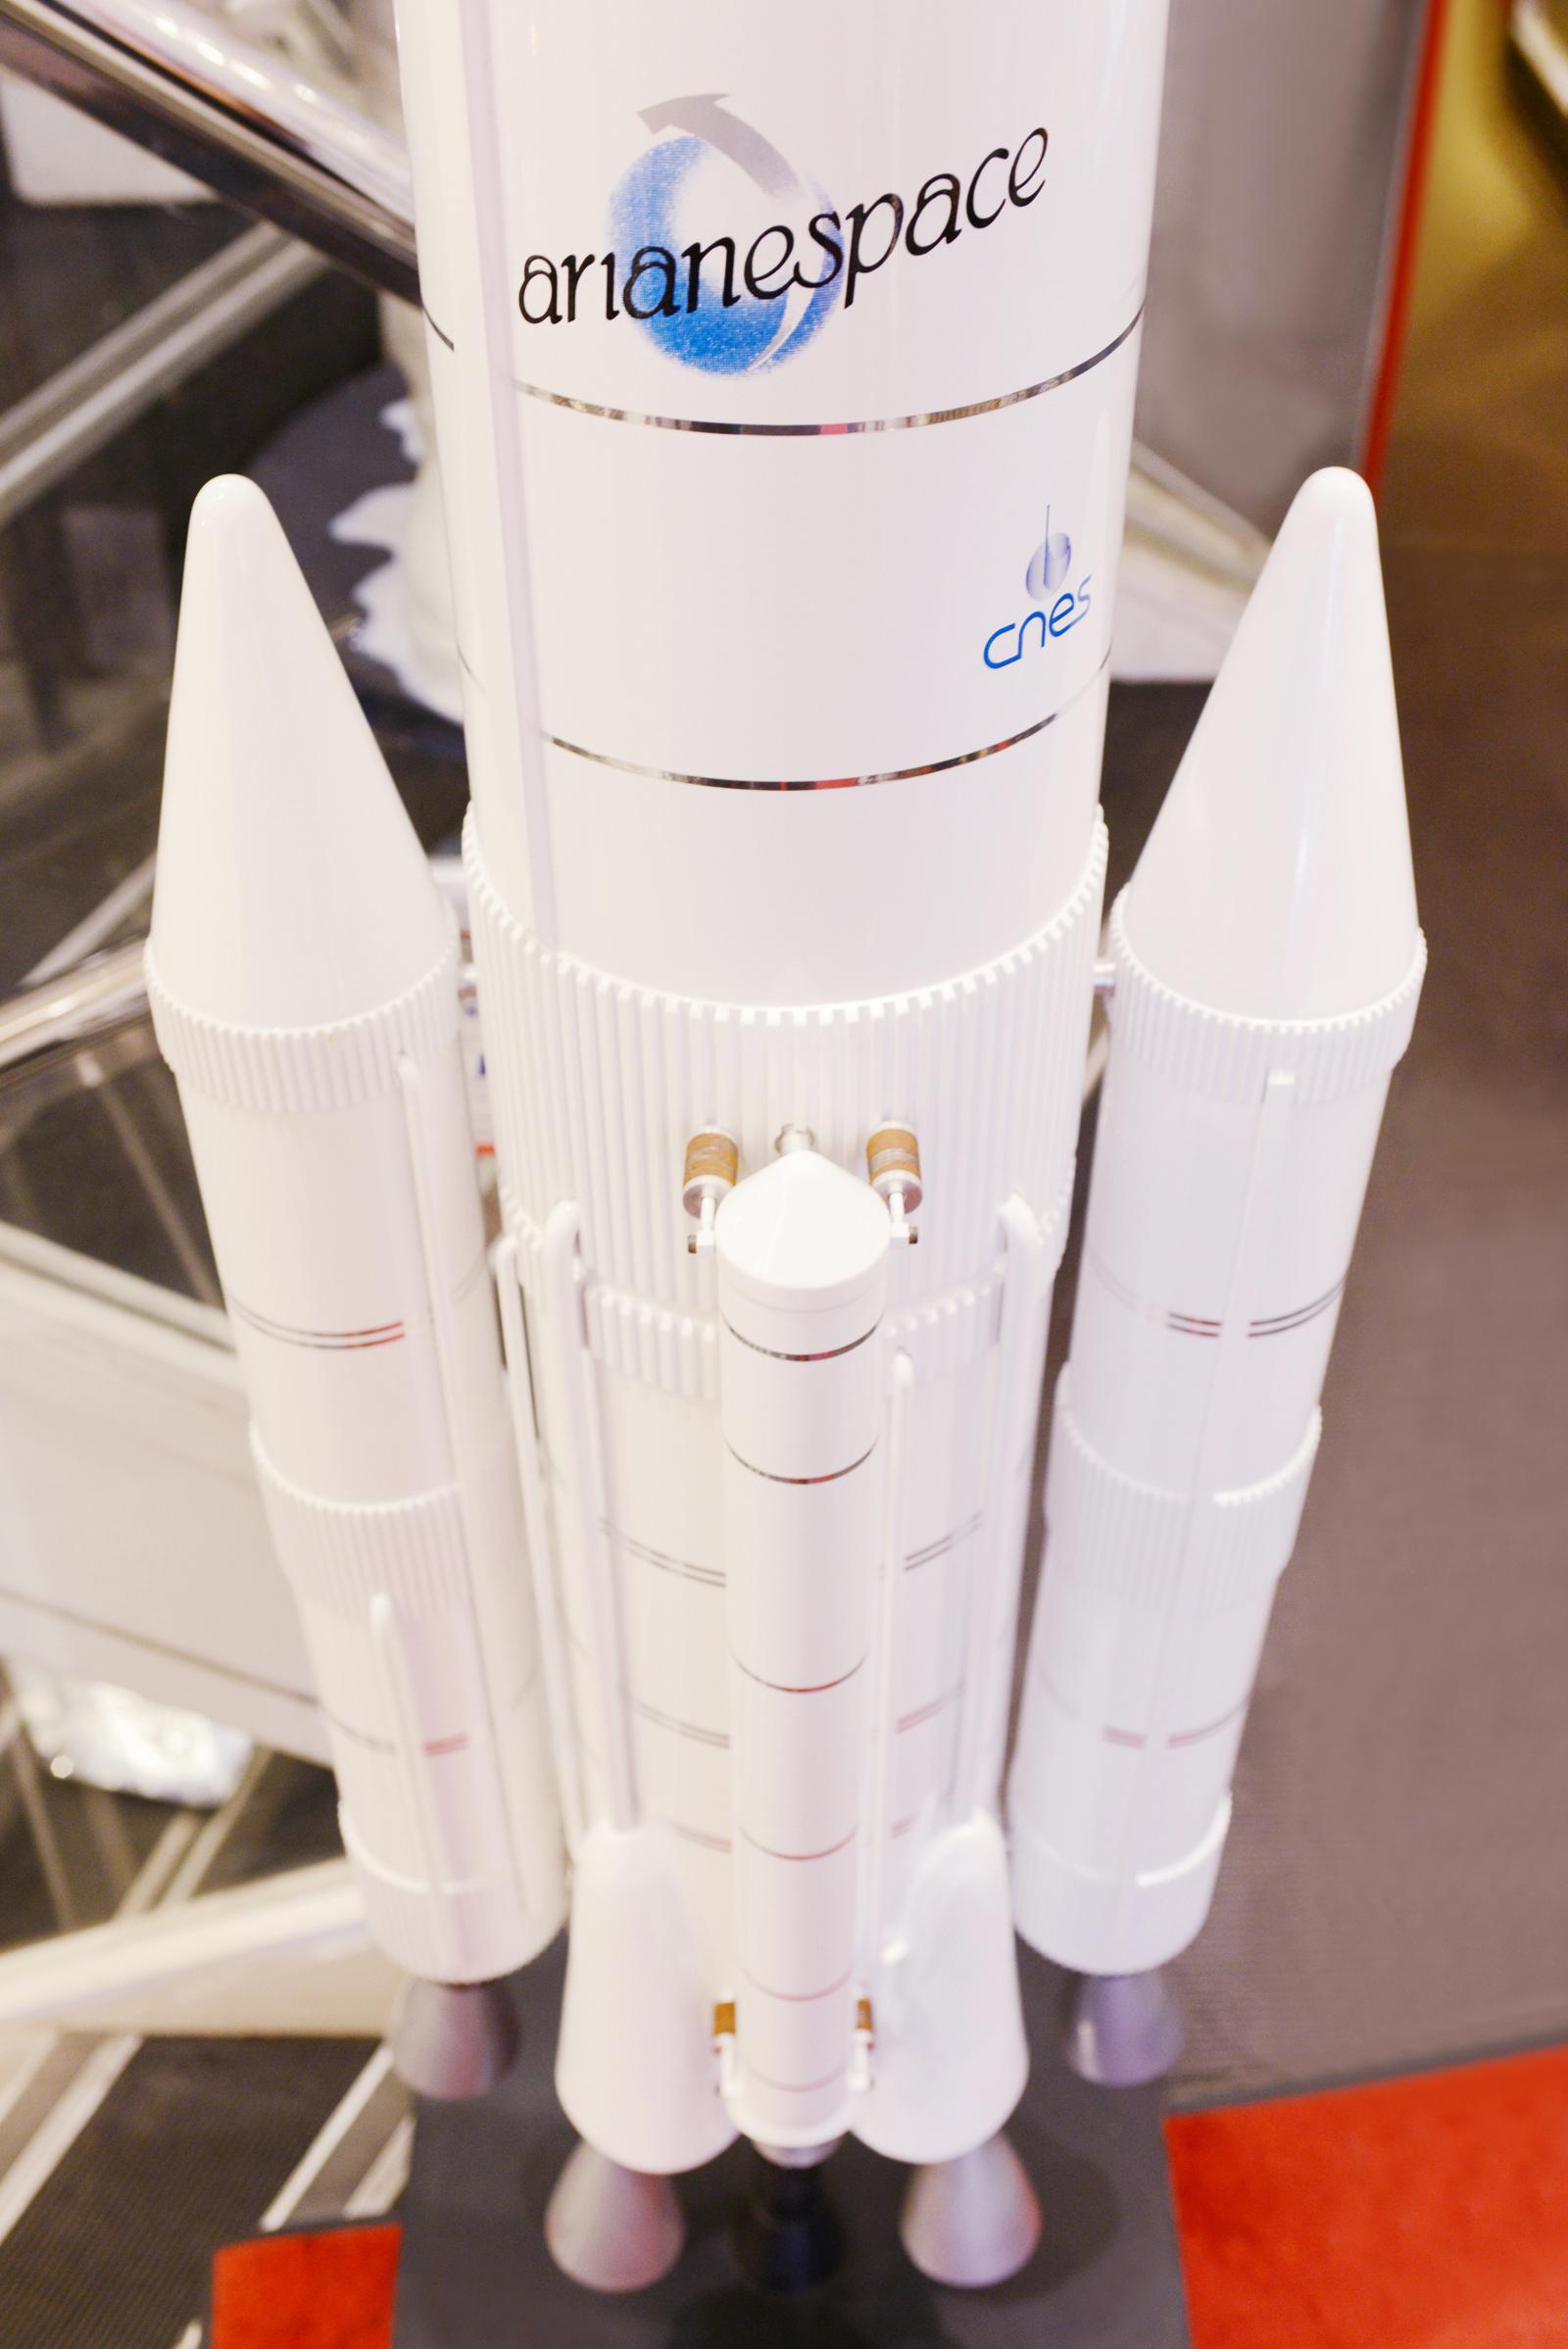 Contemporary Ariane IV 44lp Rocket Model on 1/20em Scale For Sale